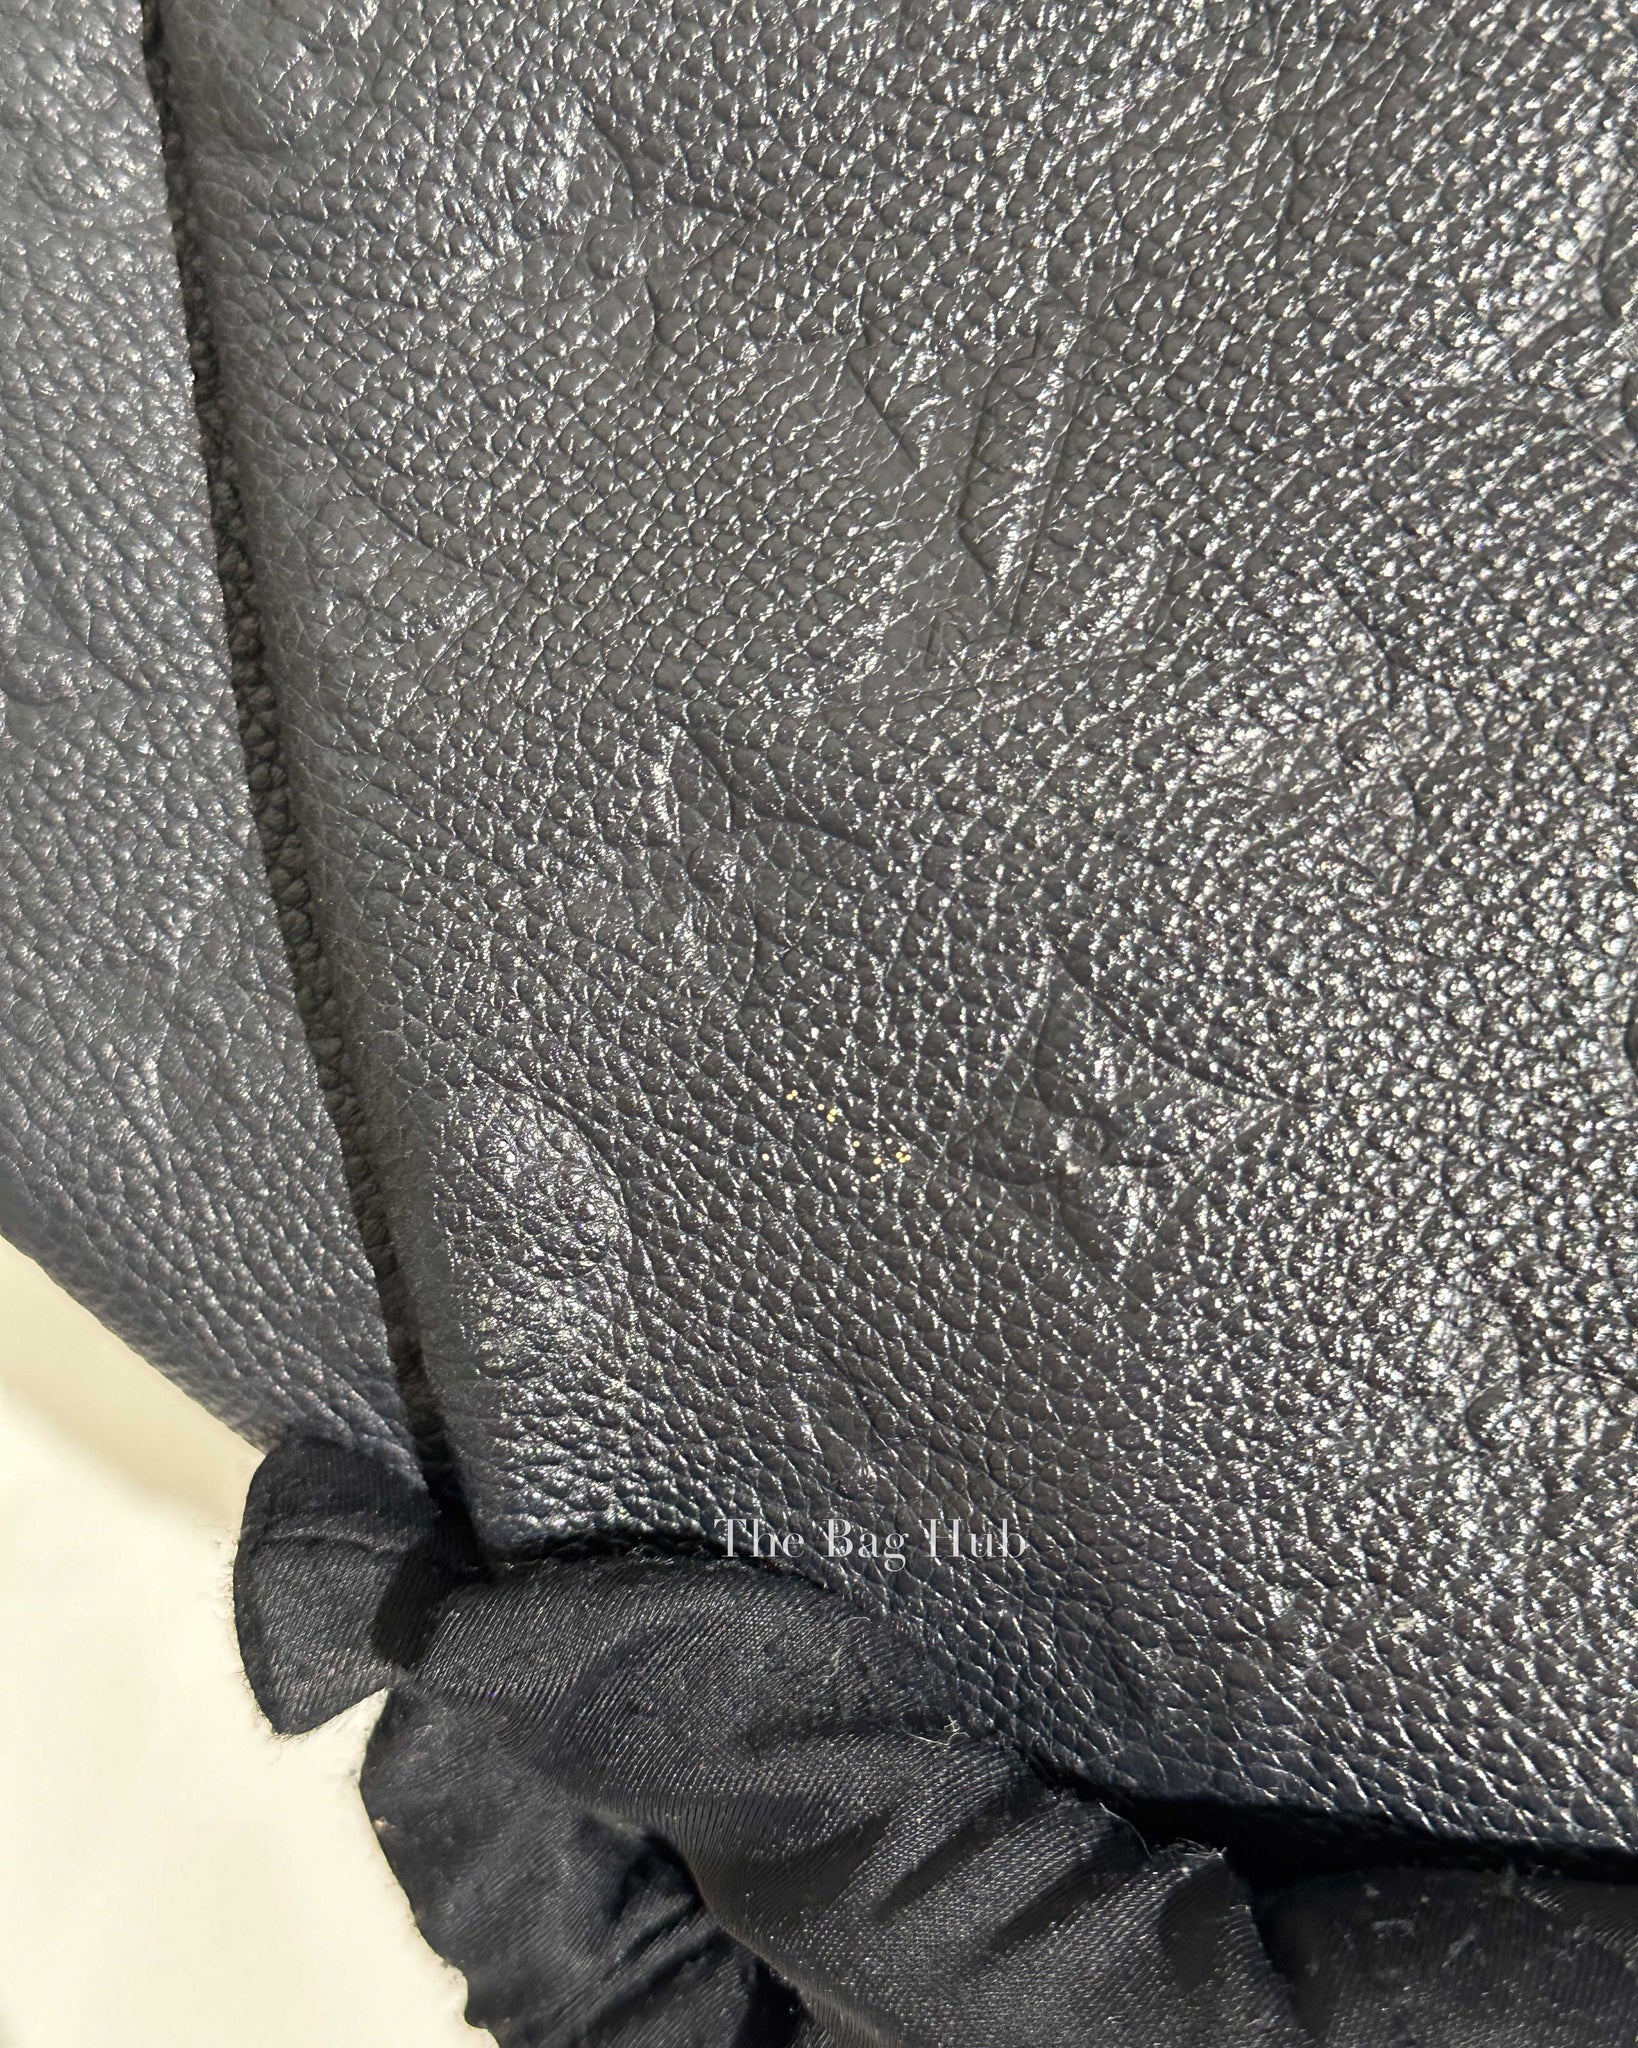 Louis Vuitton Black Monogram Empreinte Artsy MM Bag